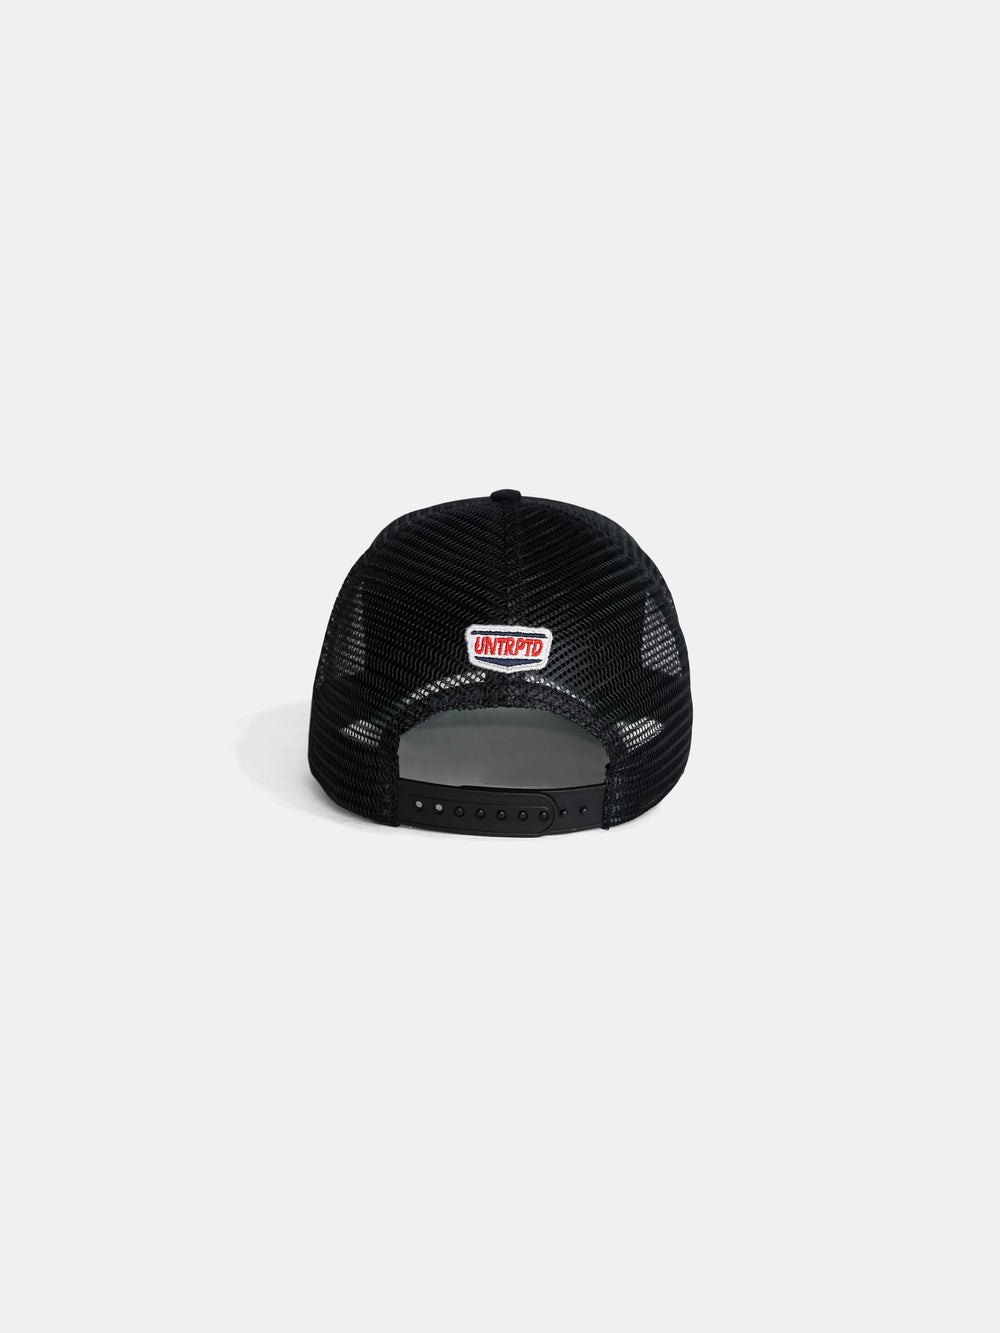 The Motor Club Trucker Hat Black - Back